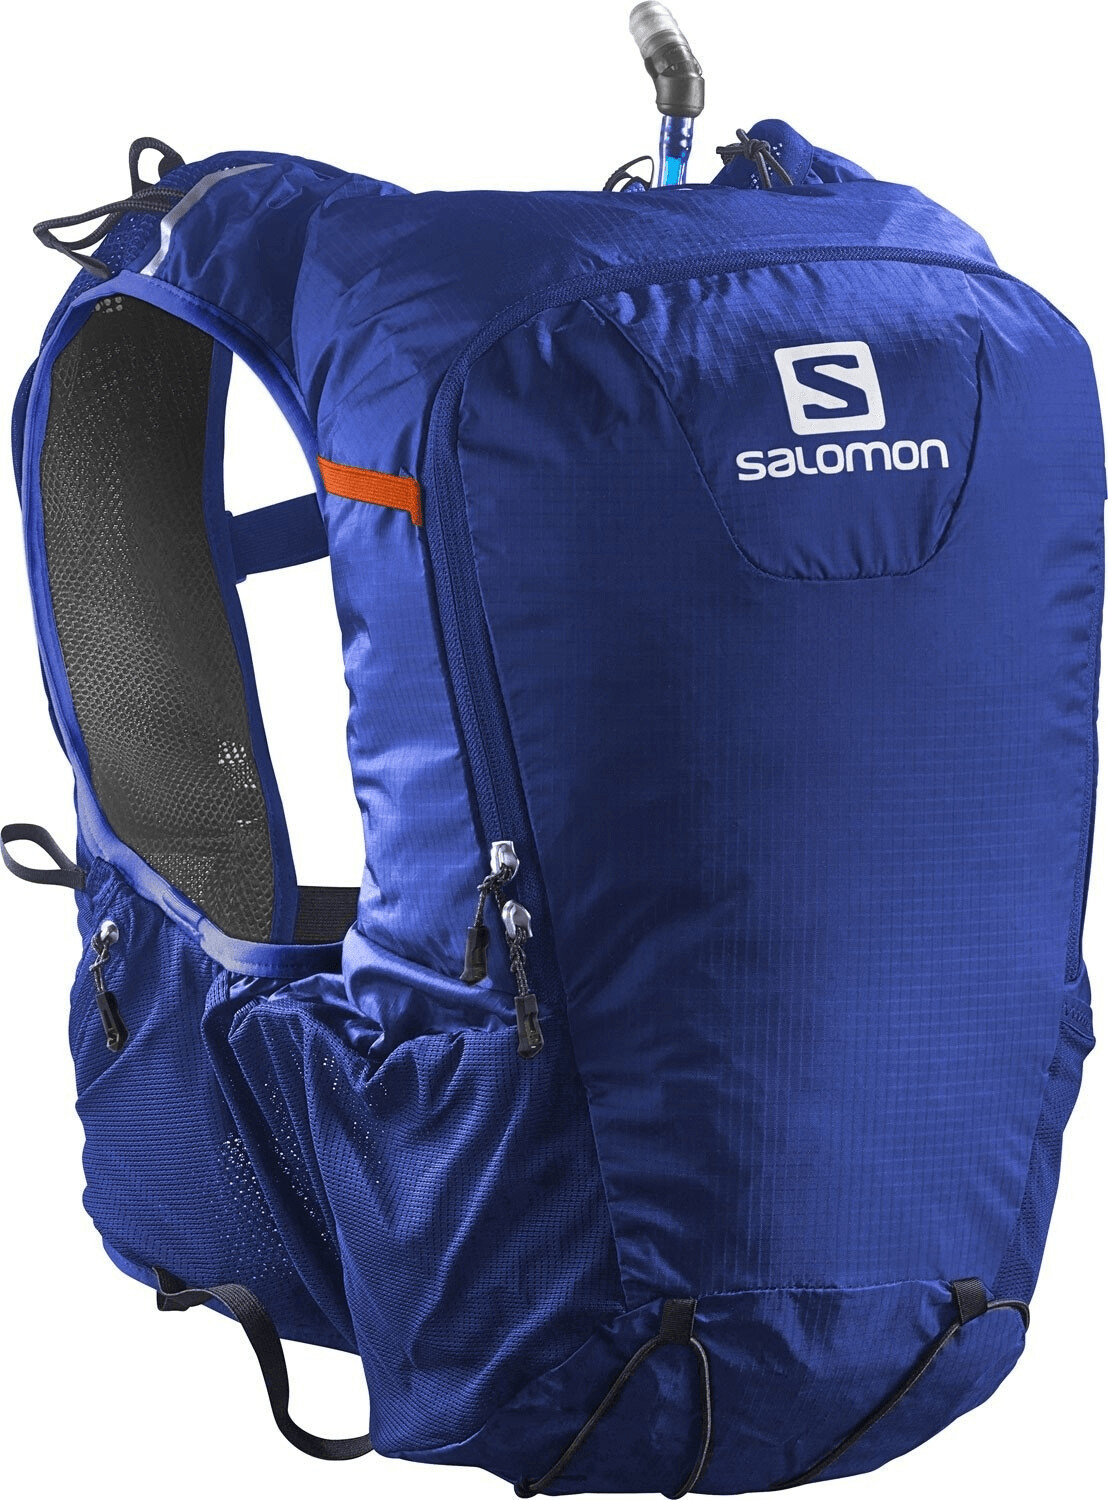 Salomon Skin Pro 15 Set blue yonder/vivid arancione